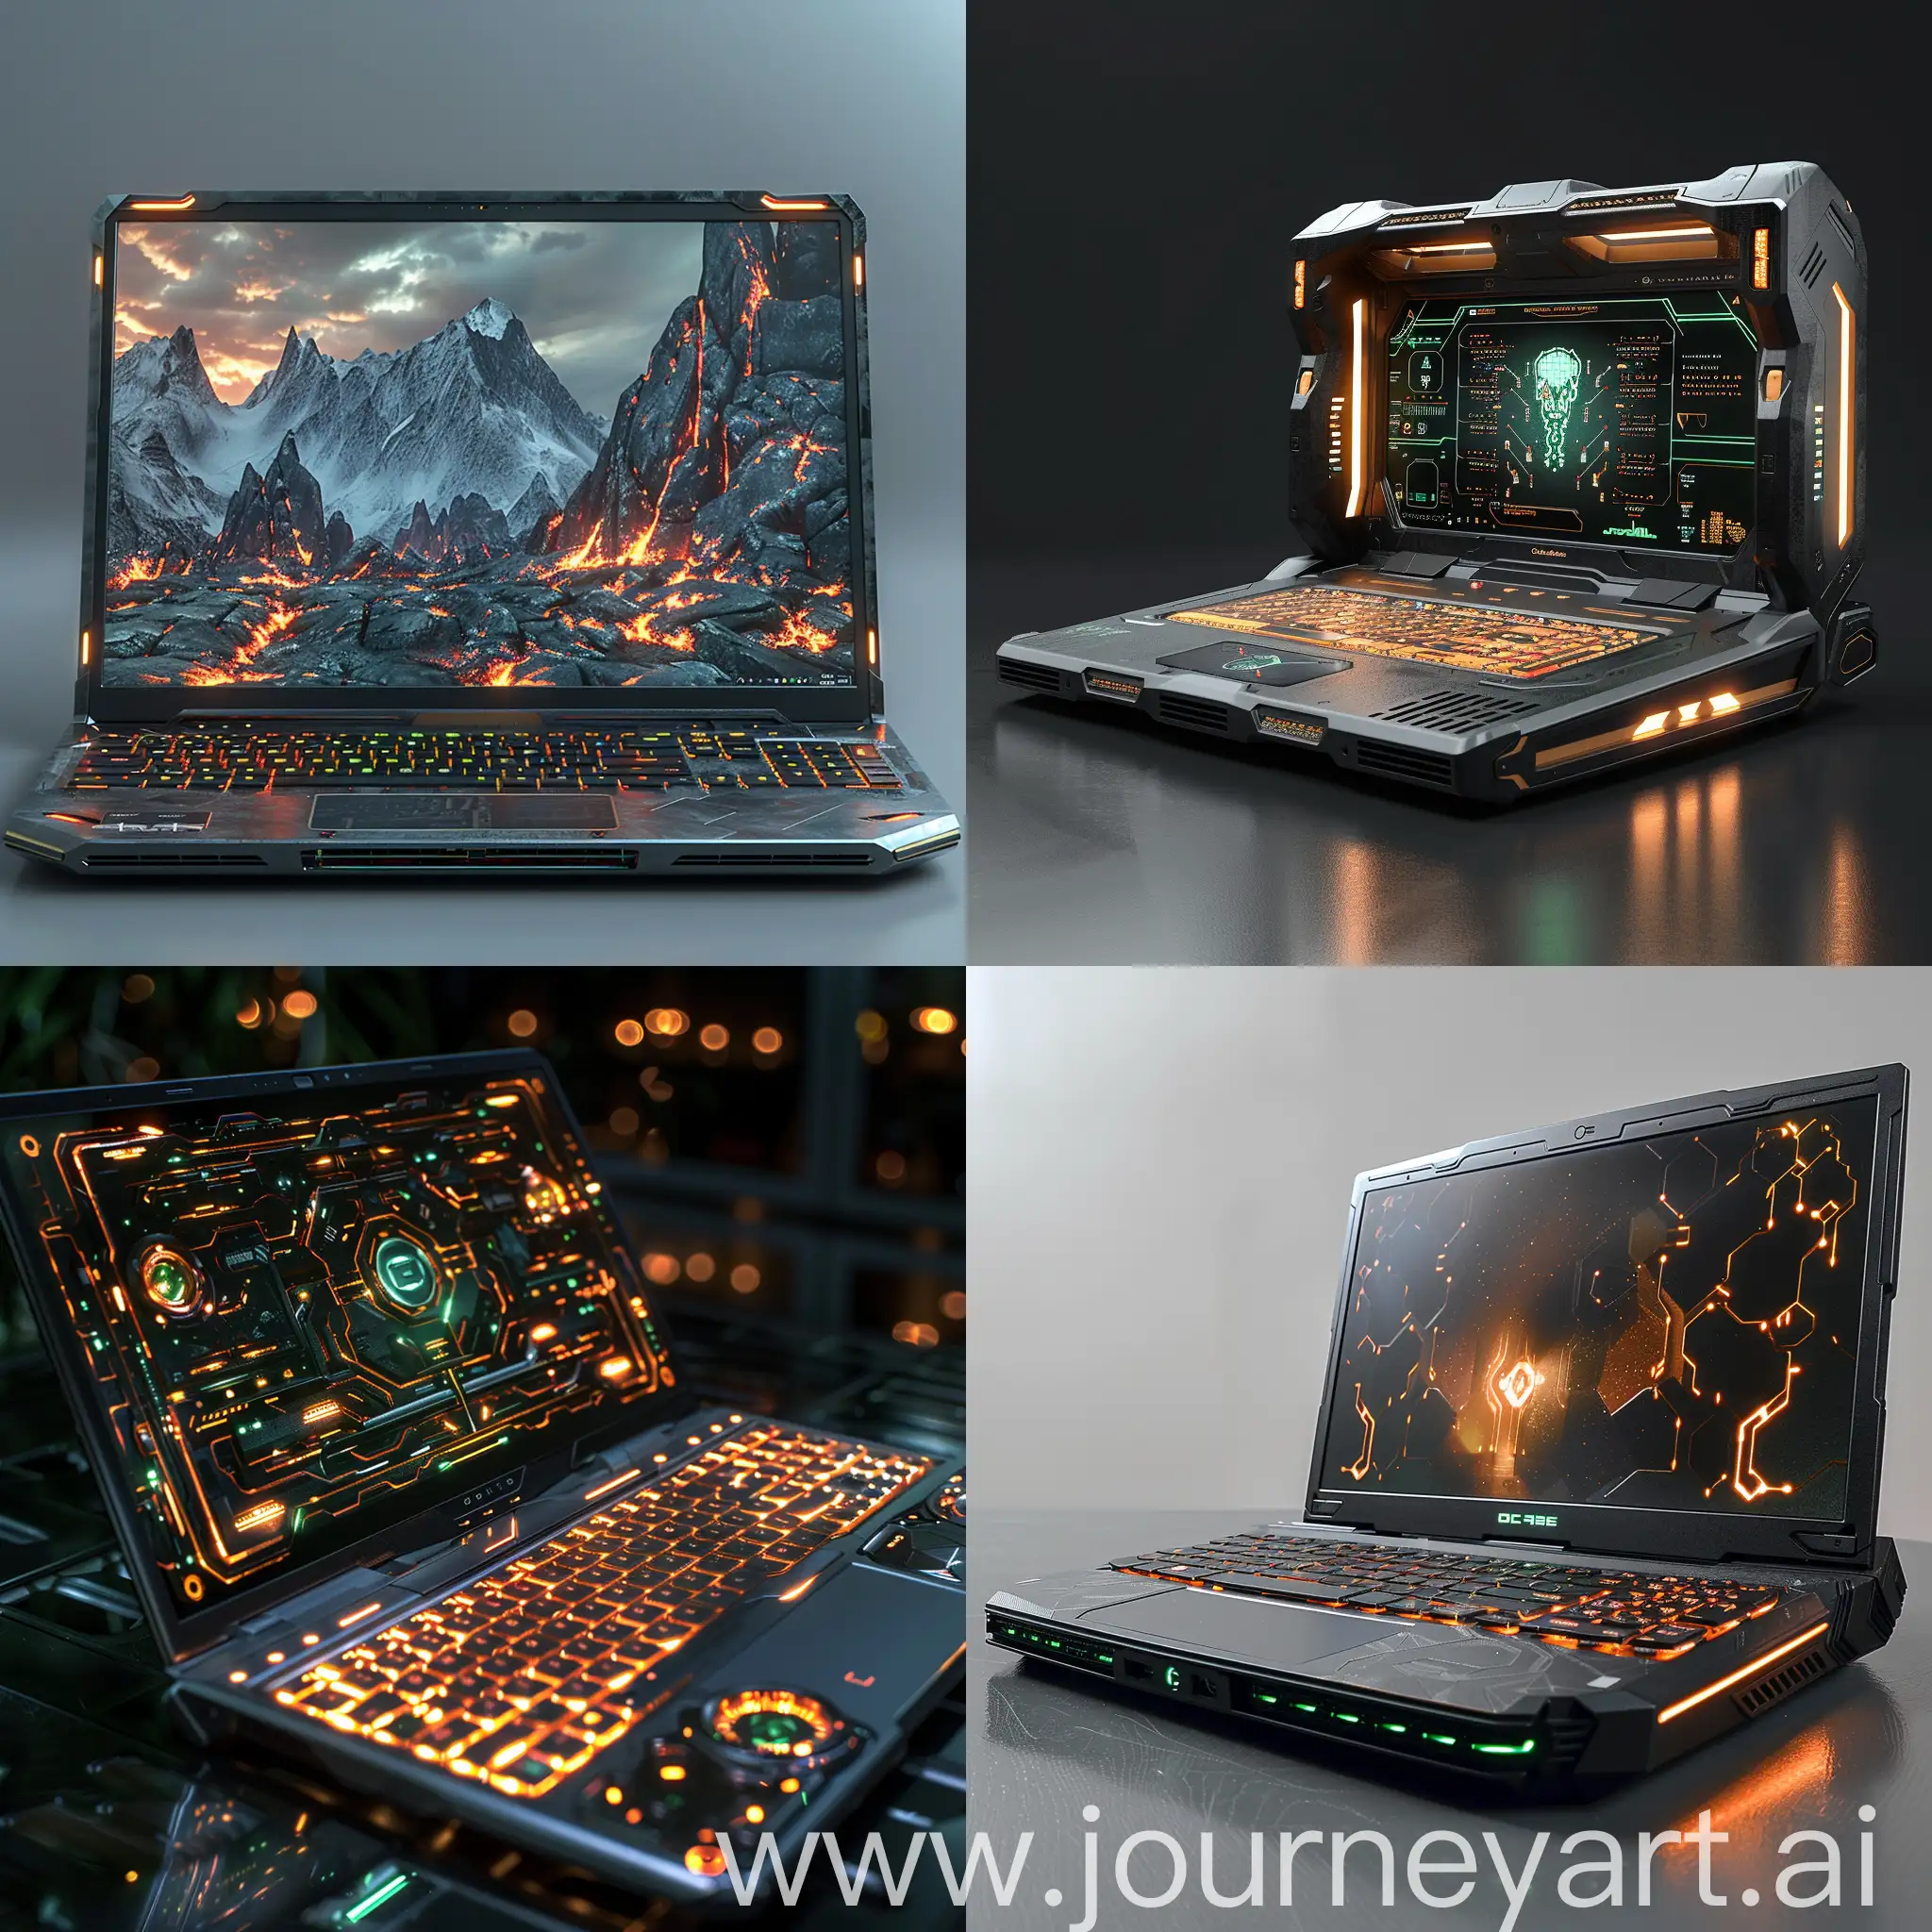 Futuristic-EcoFriendly-HighTech-Laptop-in-Octane-Render